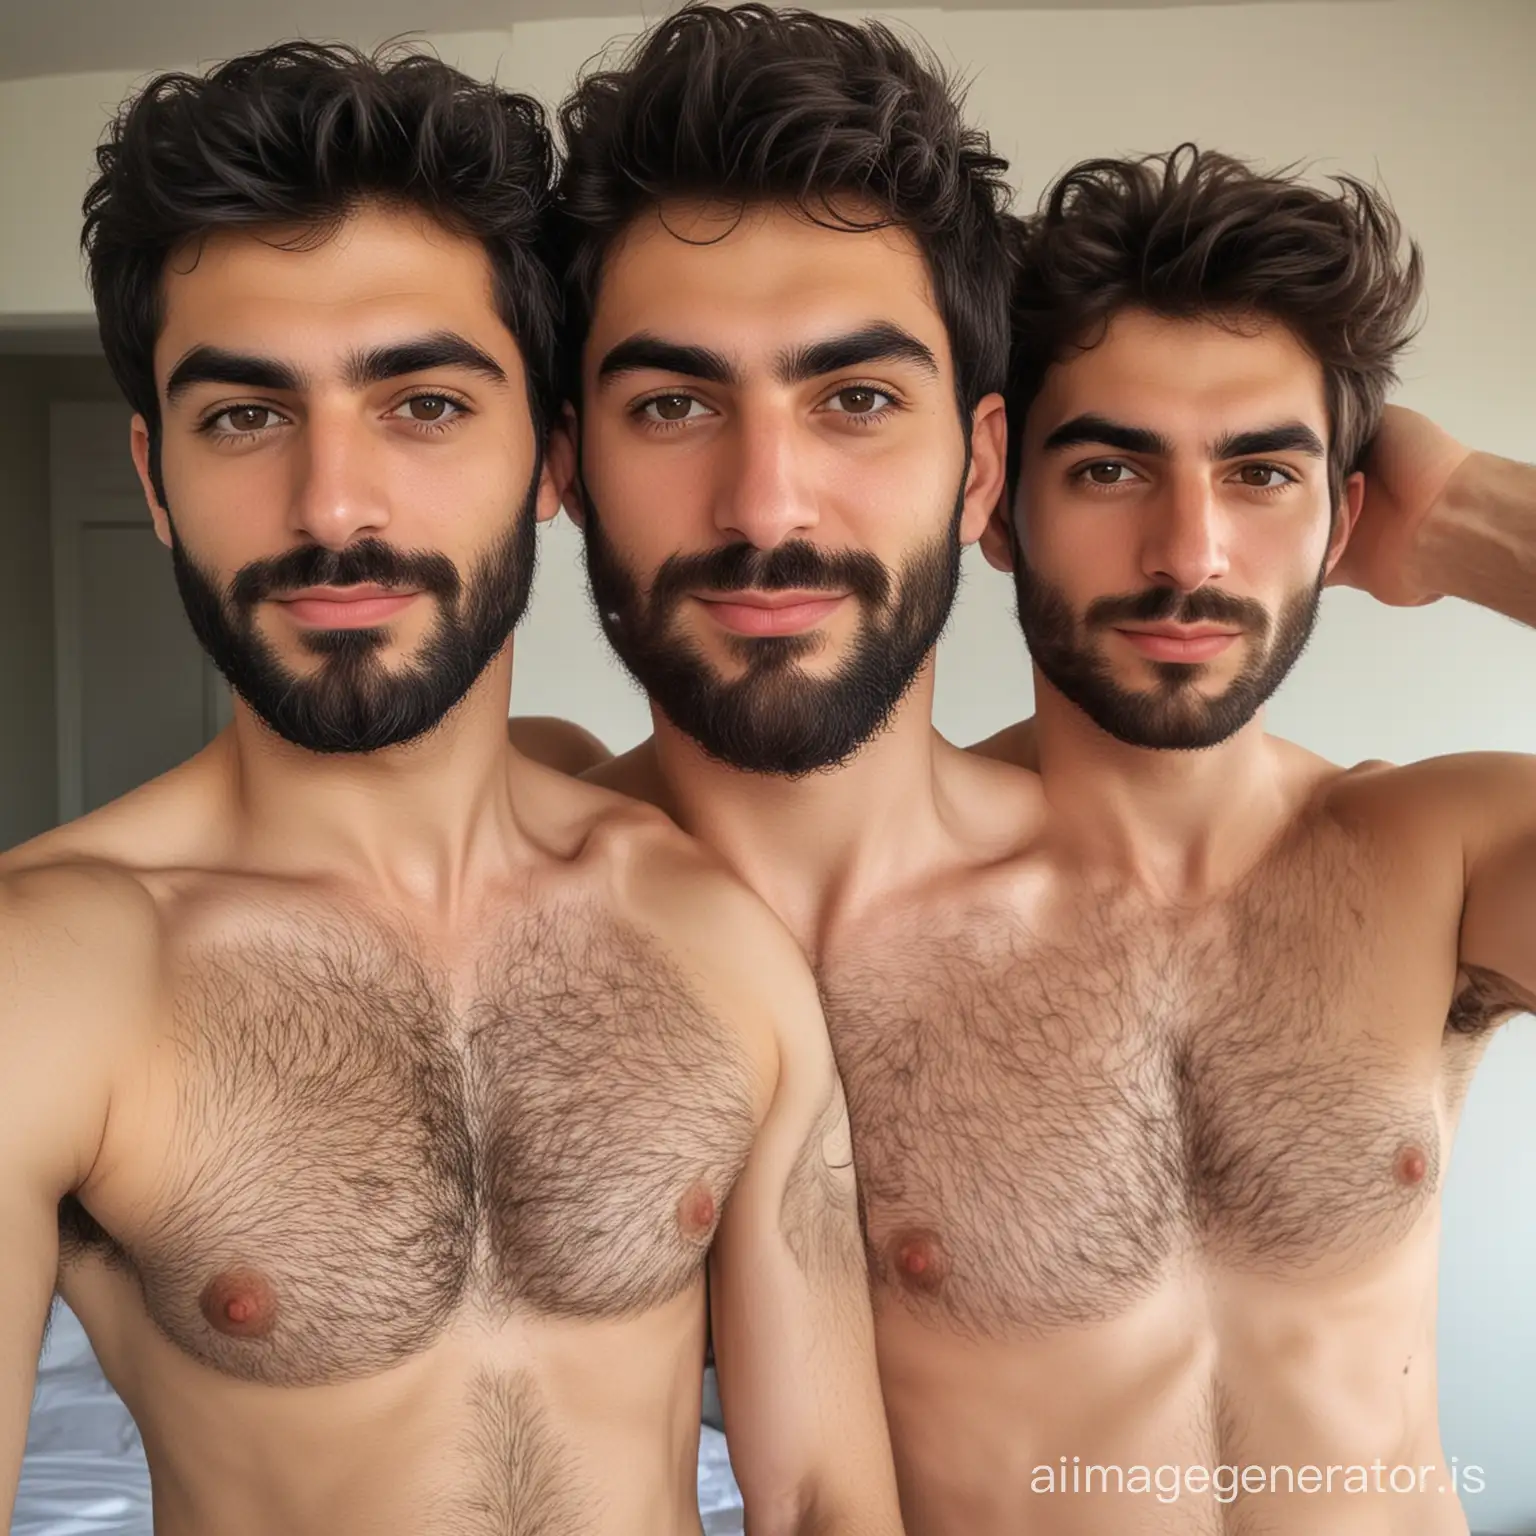 Erotic-Persian-Men-in-Intimate-Bedroom-Scene